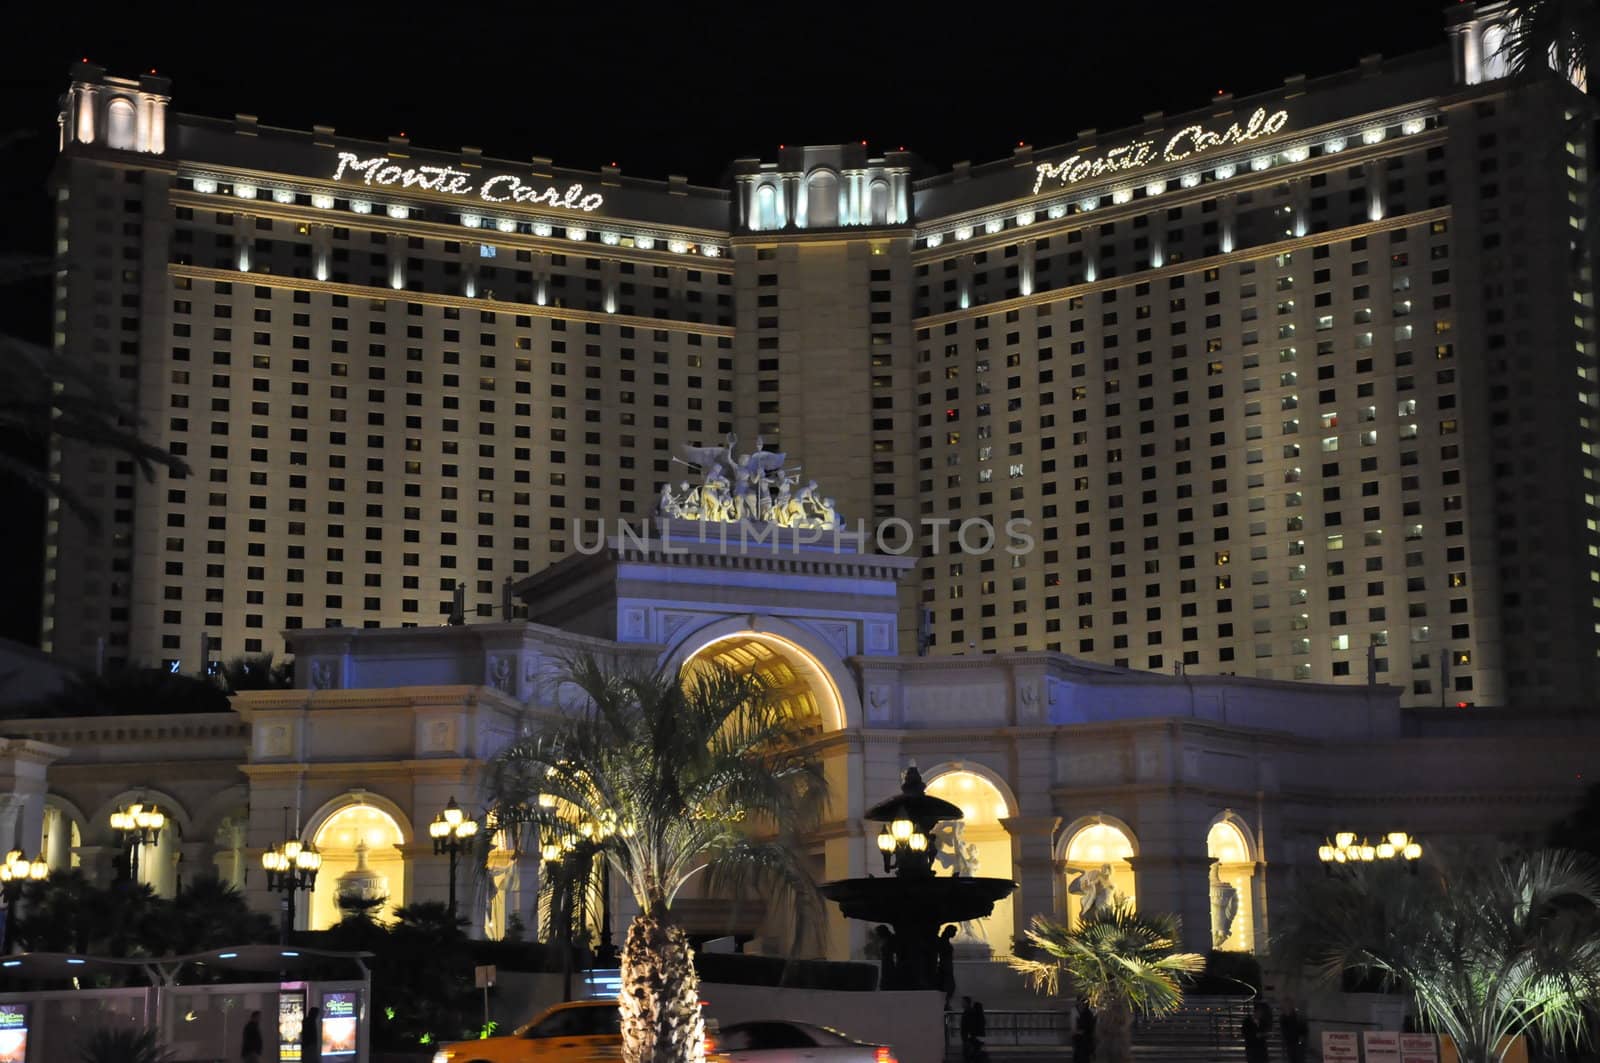 Monte Carlo Hotel and Casino in Las Vegas by sainaniritu